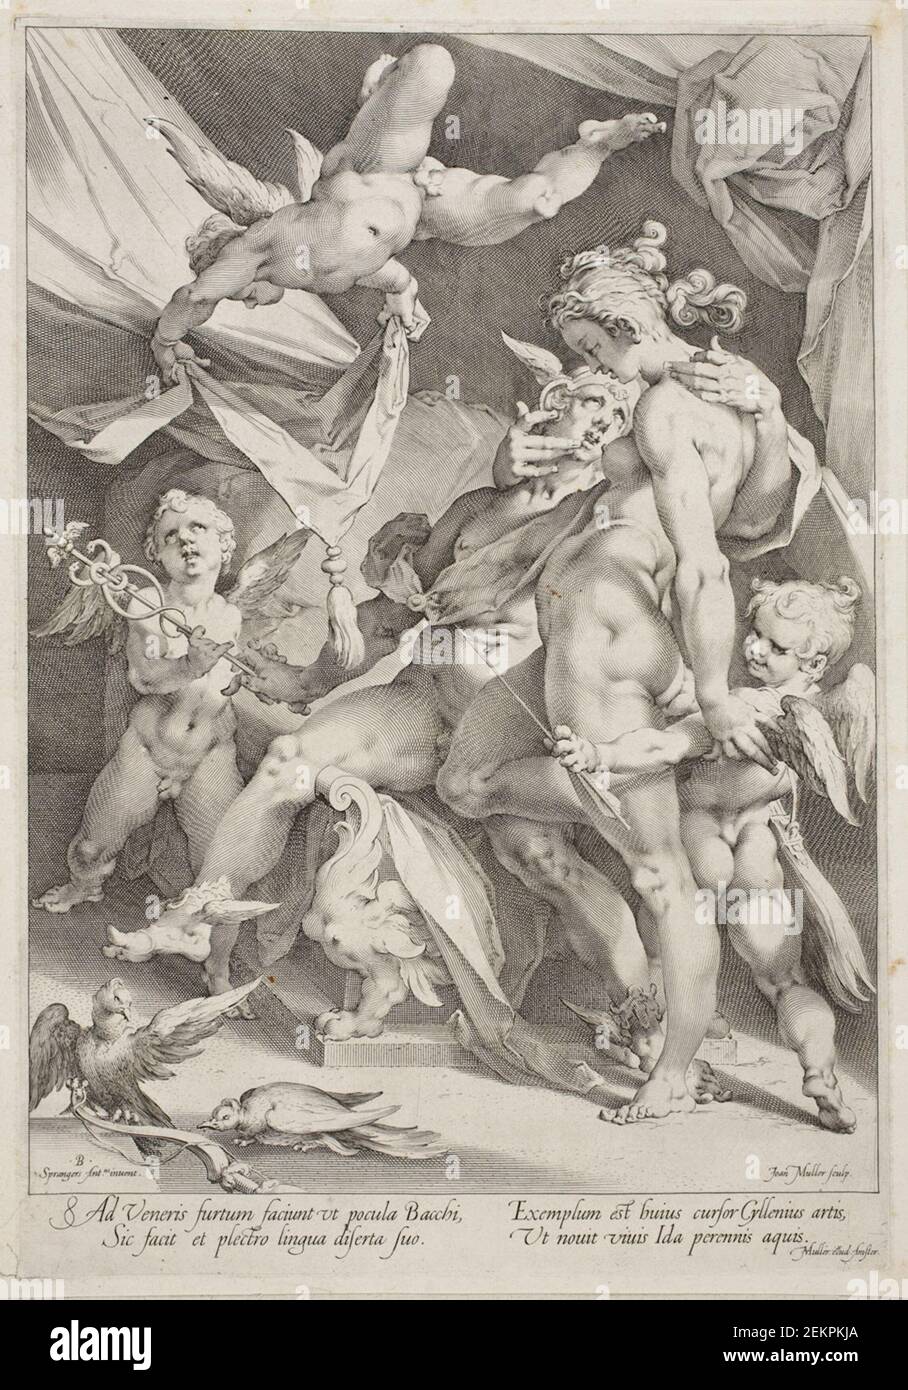 Jan Harmensz. Muller (1571-1628); Bartholomeus rampers (1546-1611), Venus and Mercury, About 1600 Stock Photo